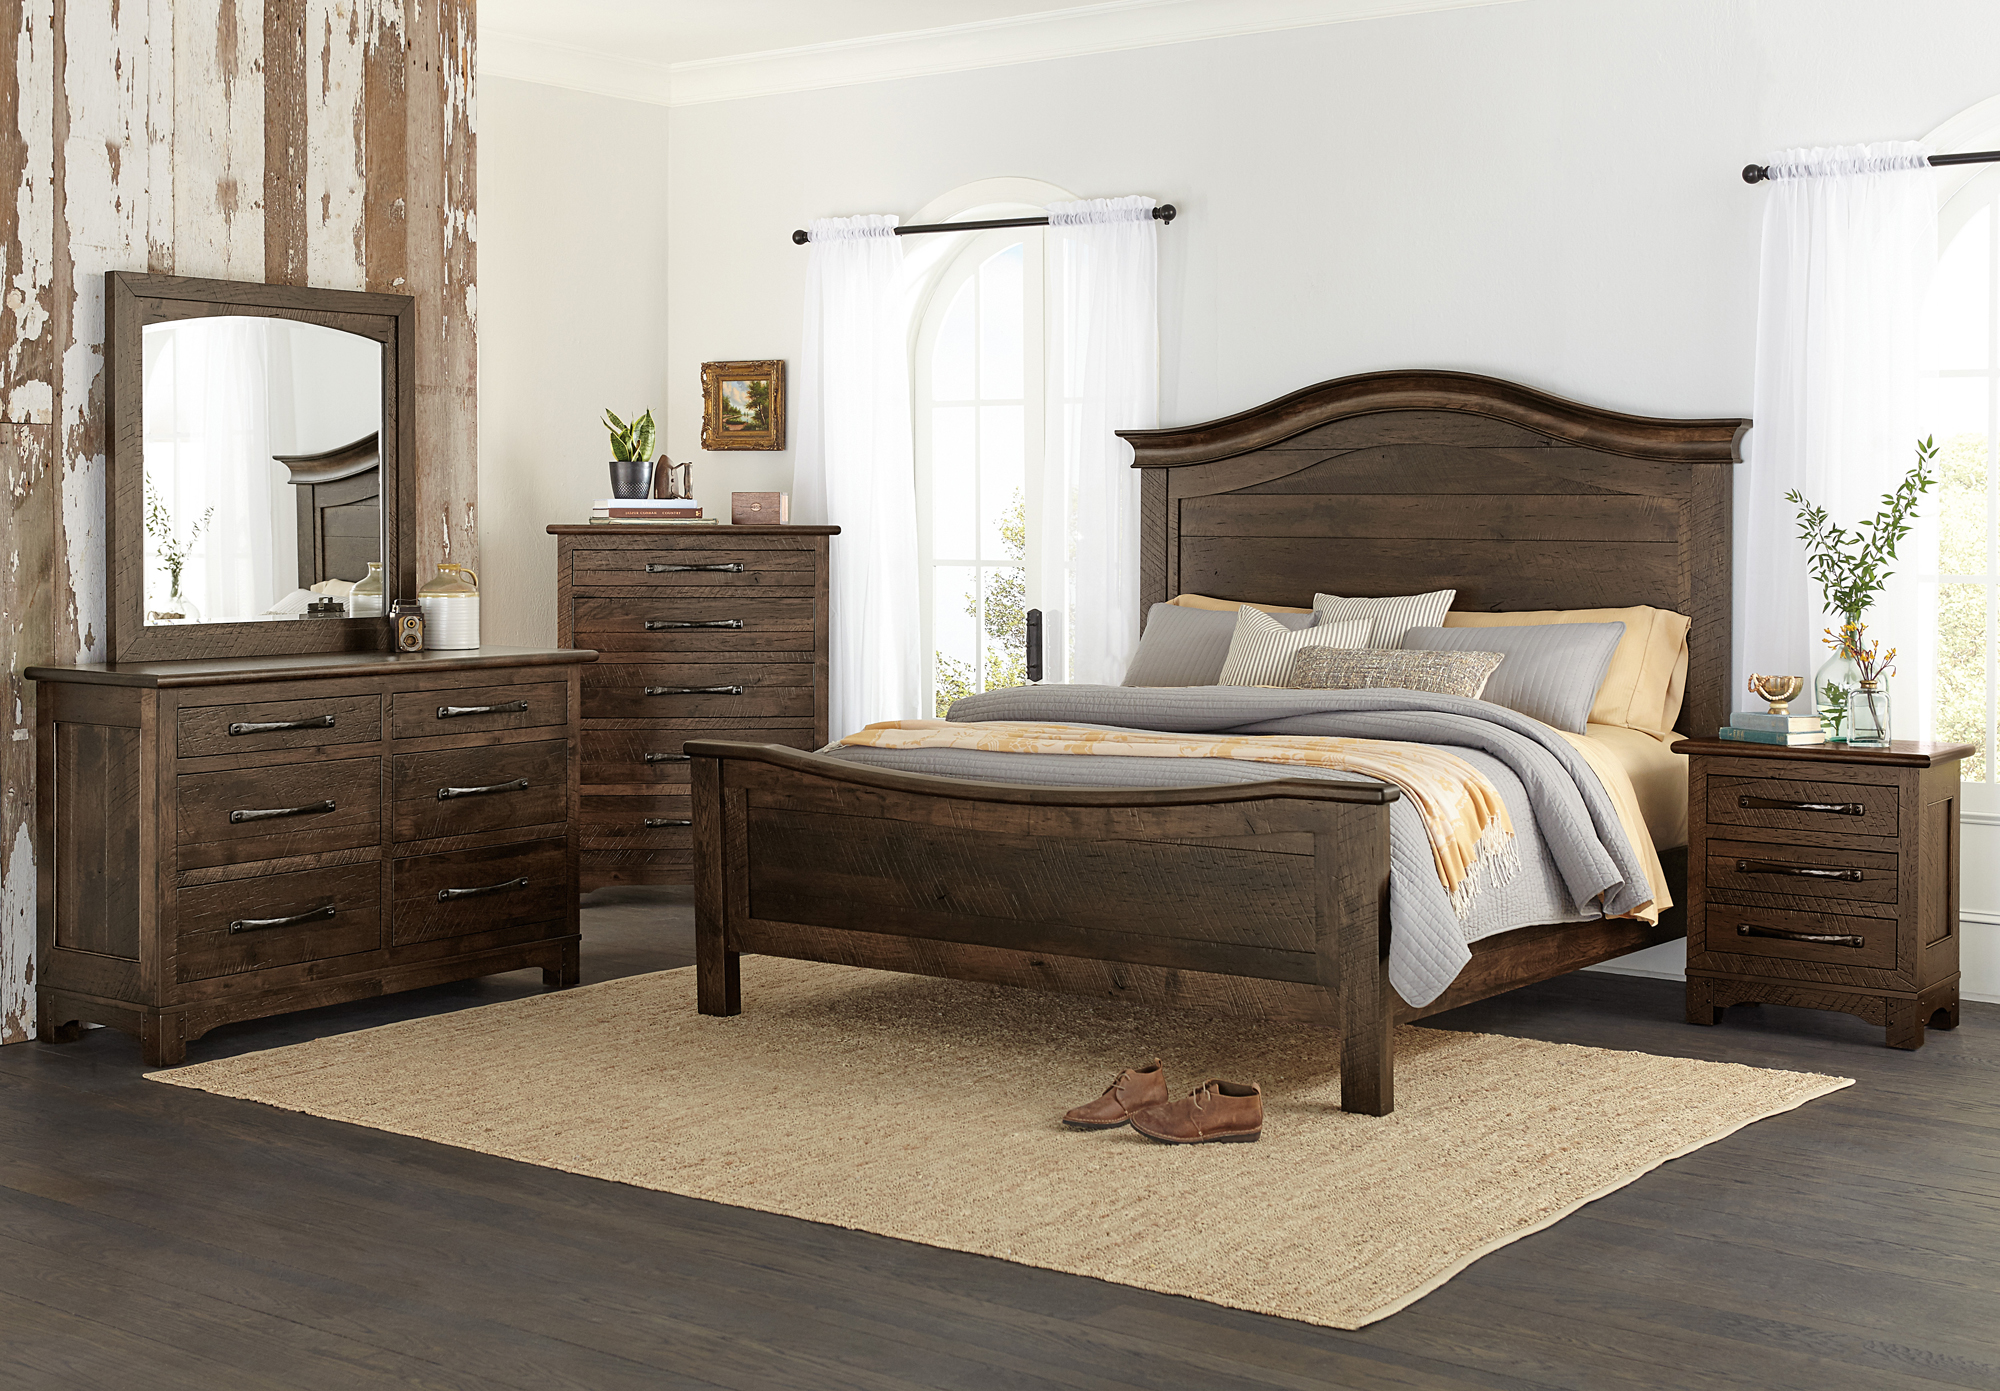 rustic amish bedroom furniture